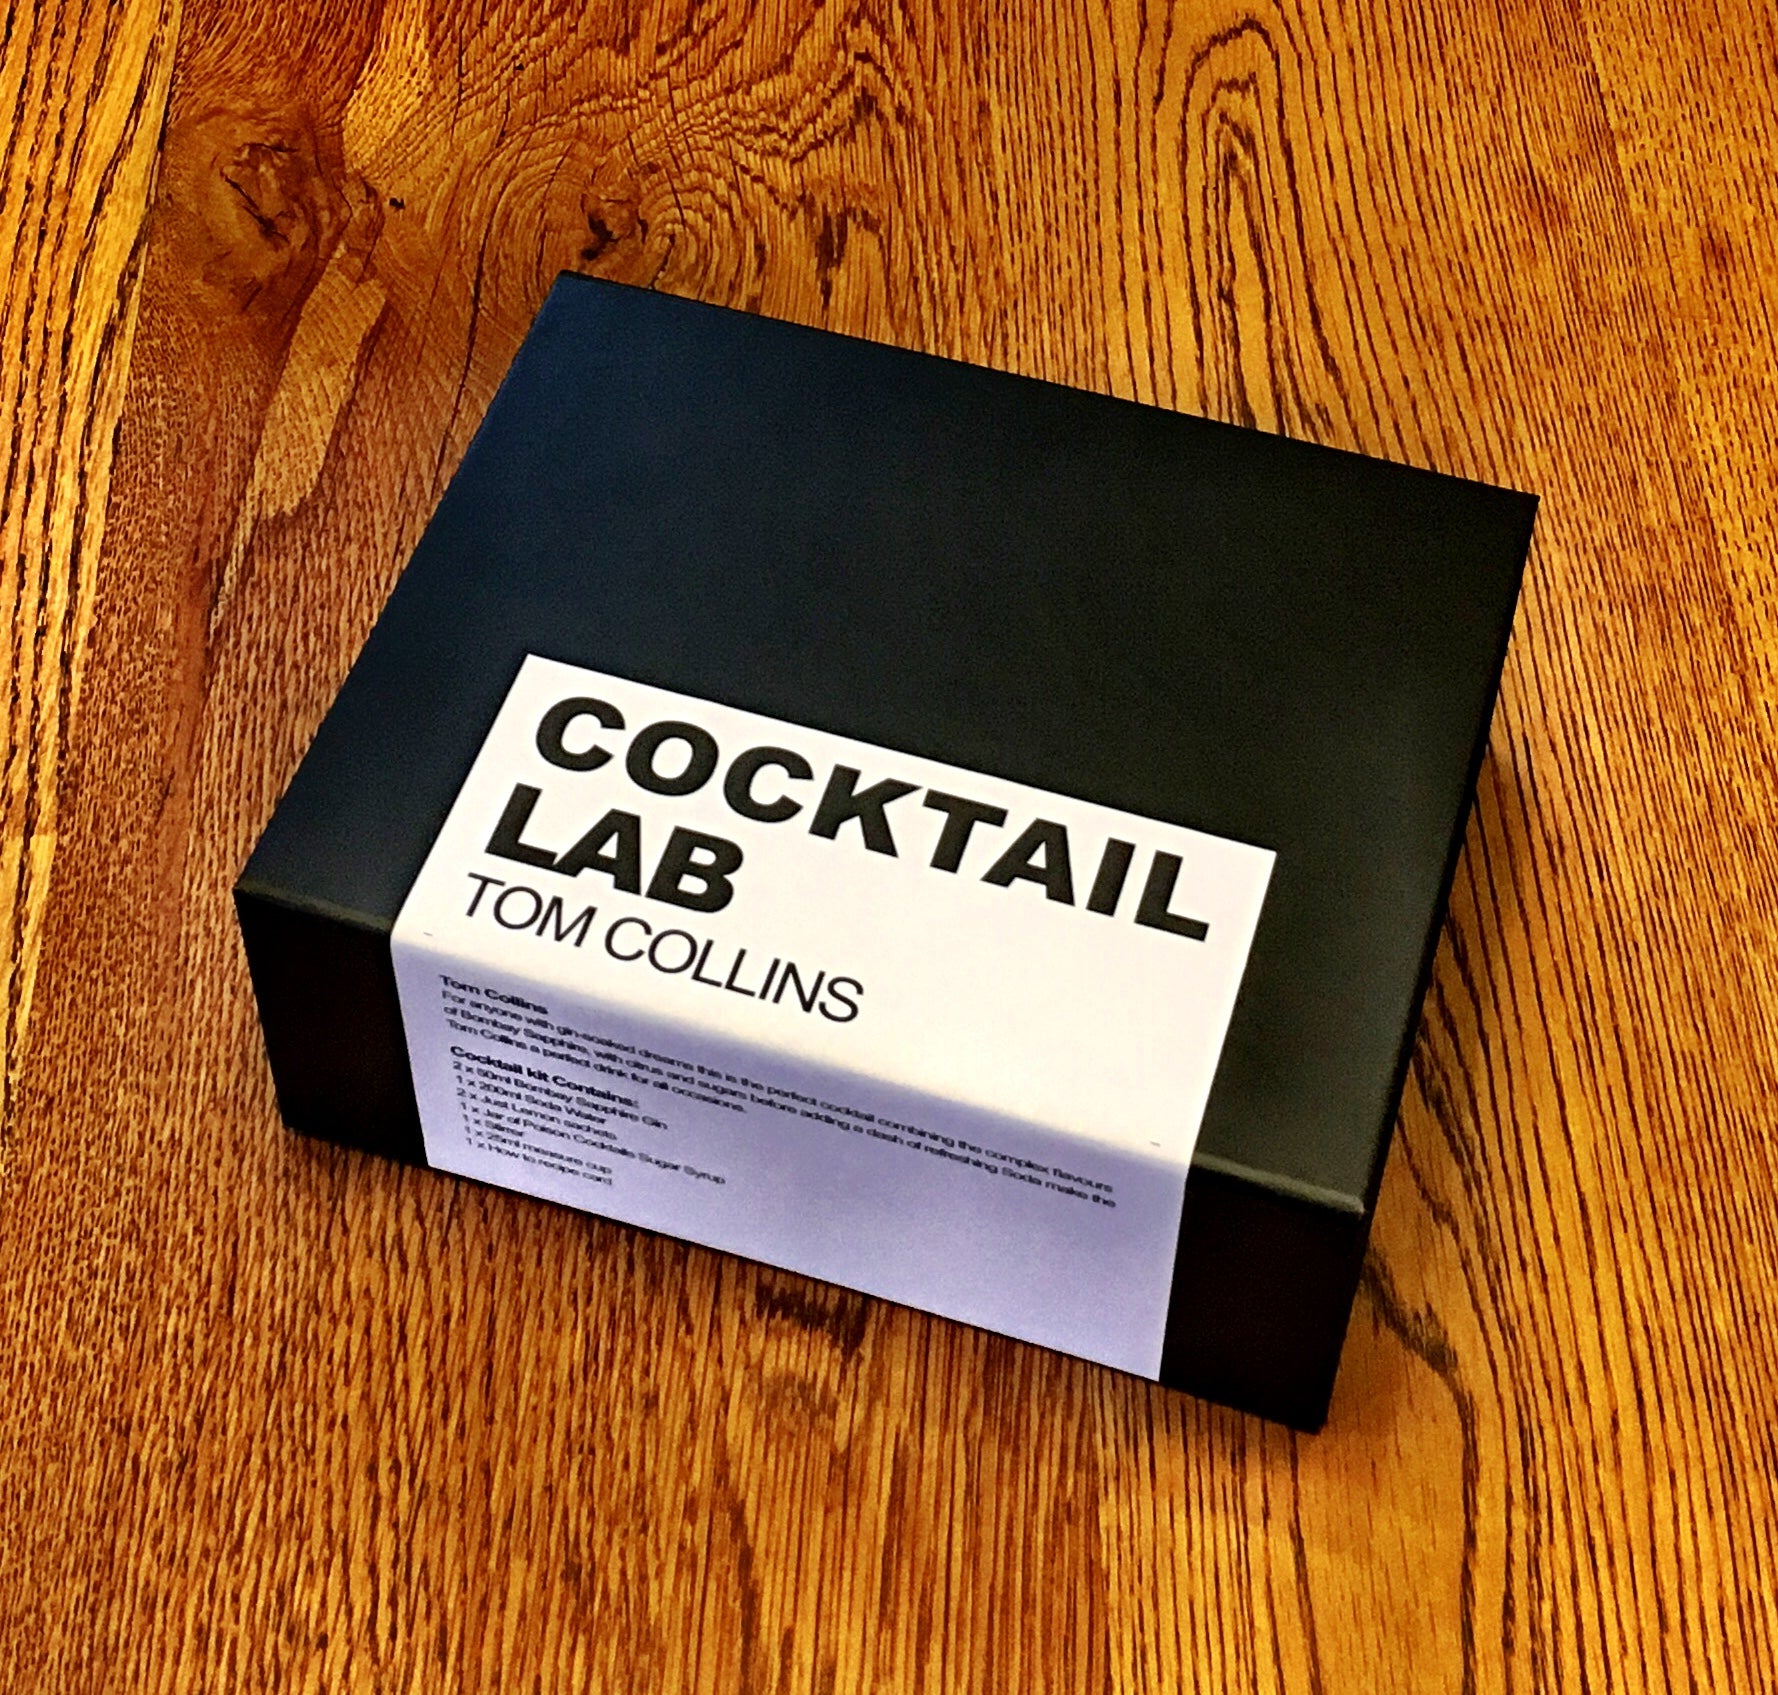 Tom Collins Cocktail Kit Gift Box